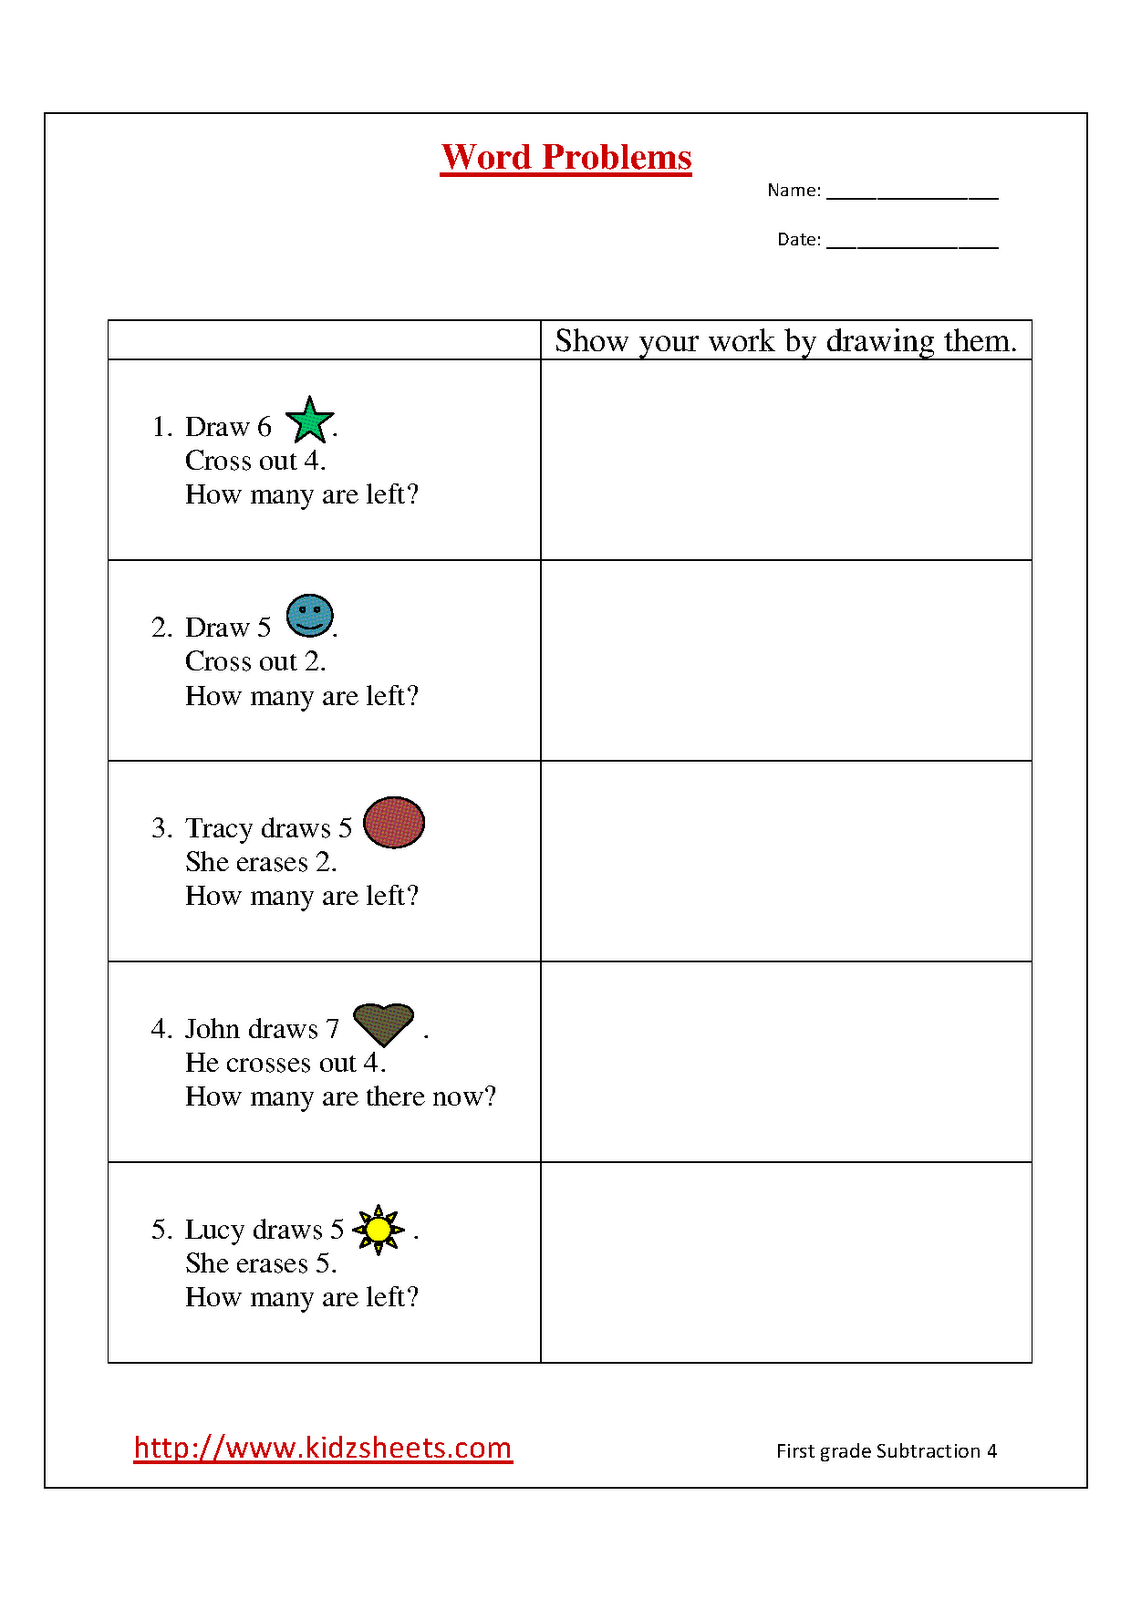 12-best-images-of-1st-grade-subtraction-word-problems-worksheets-1st